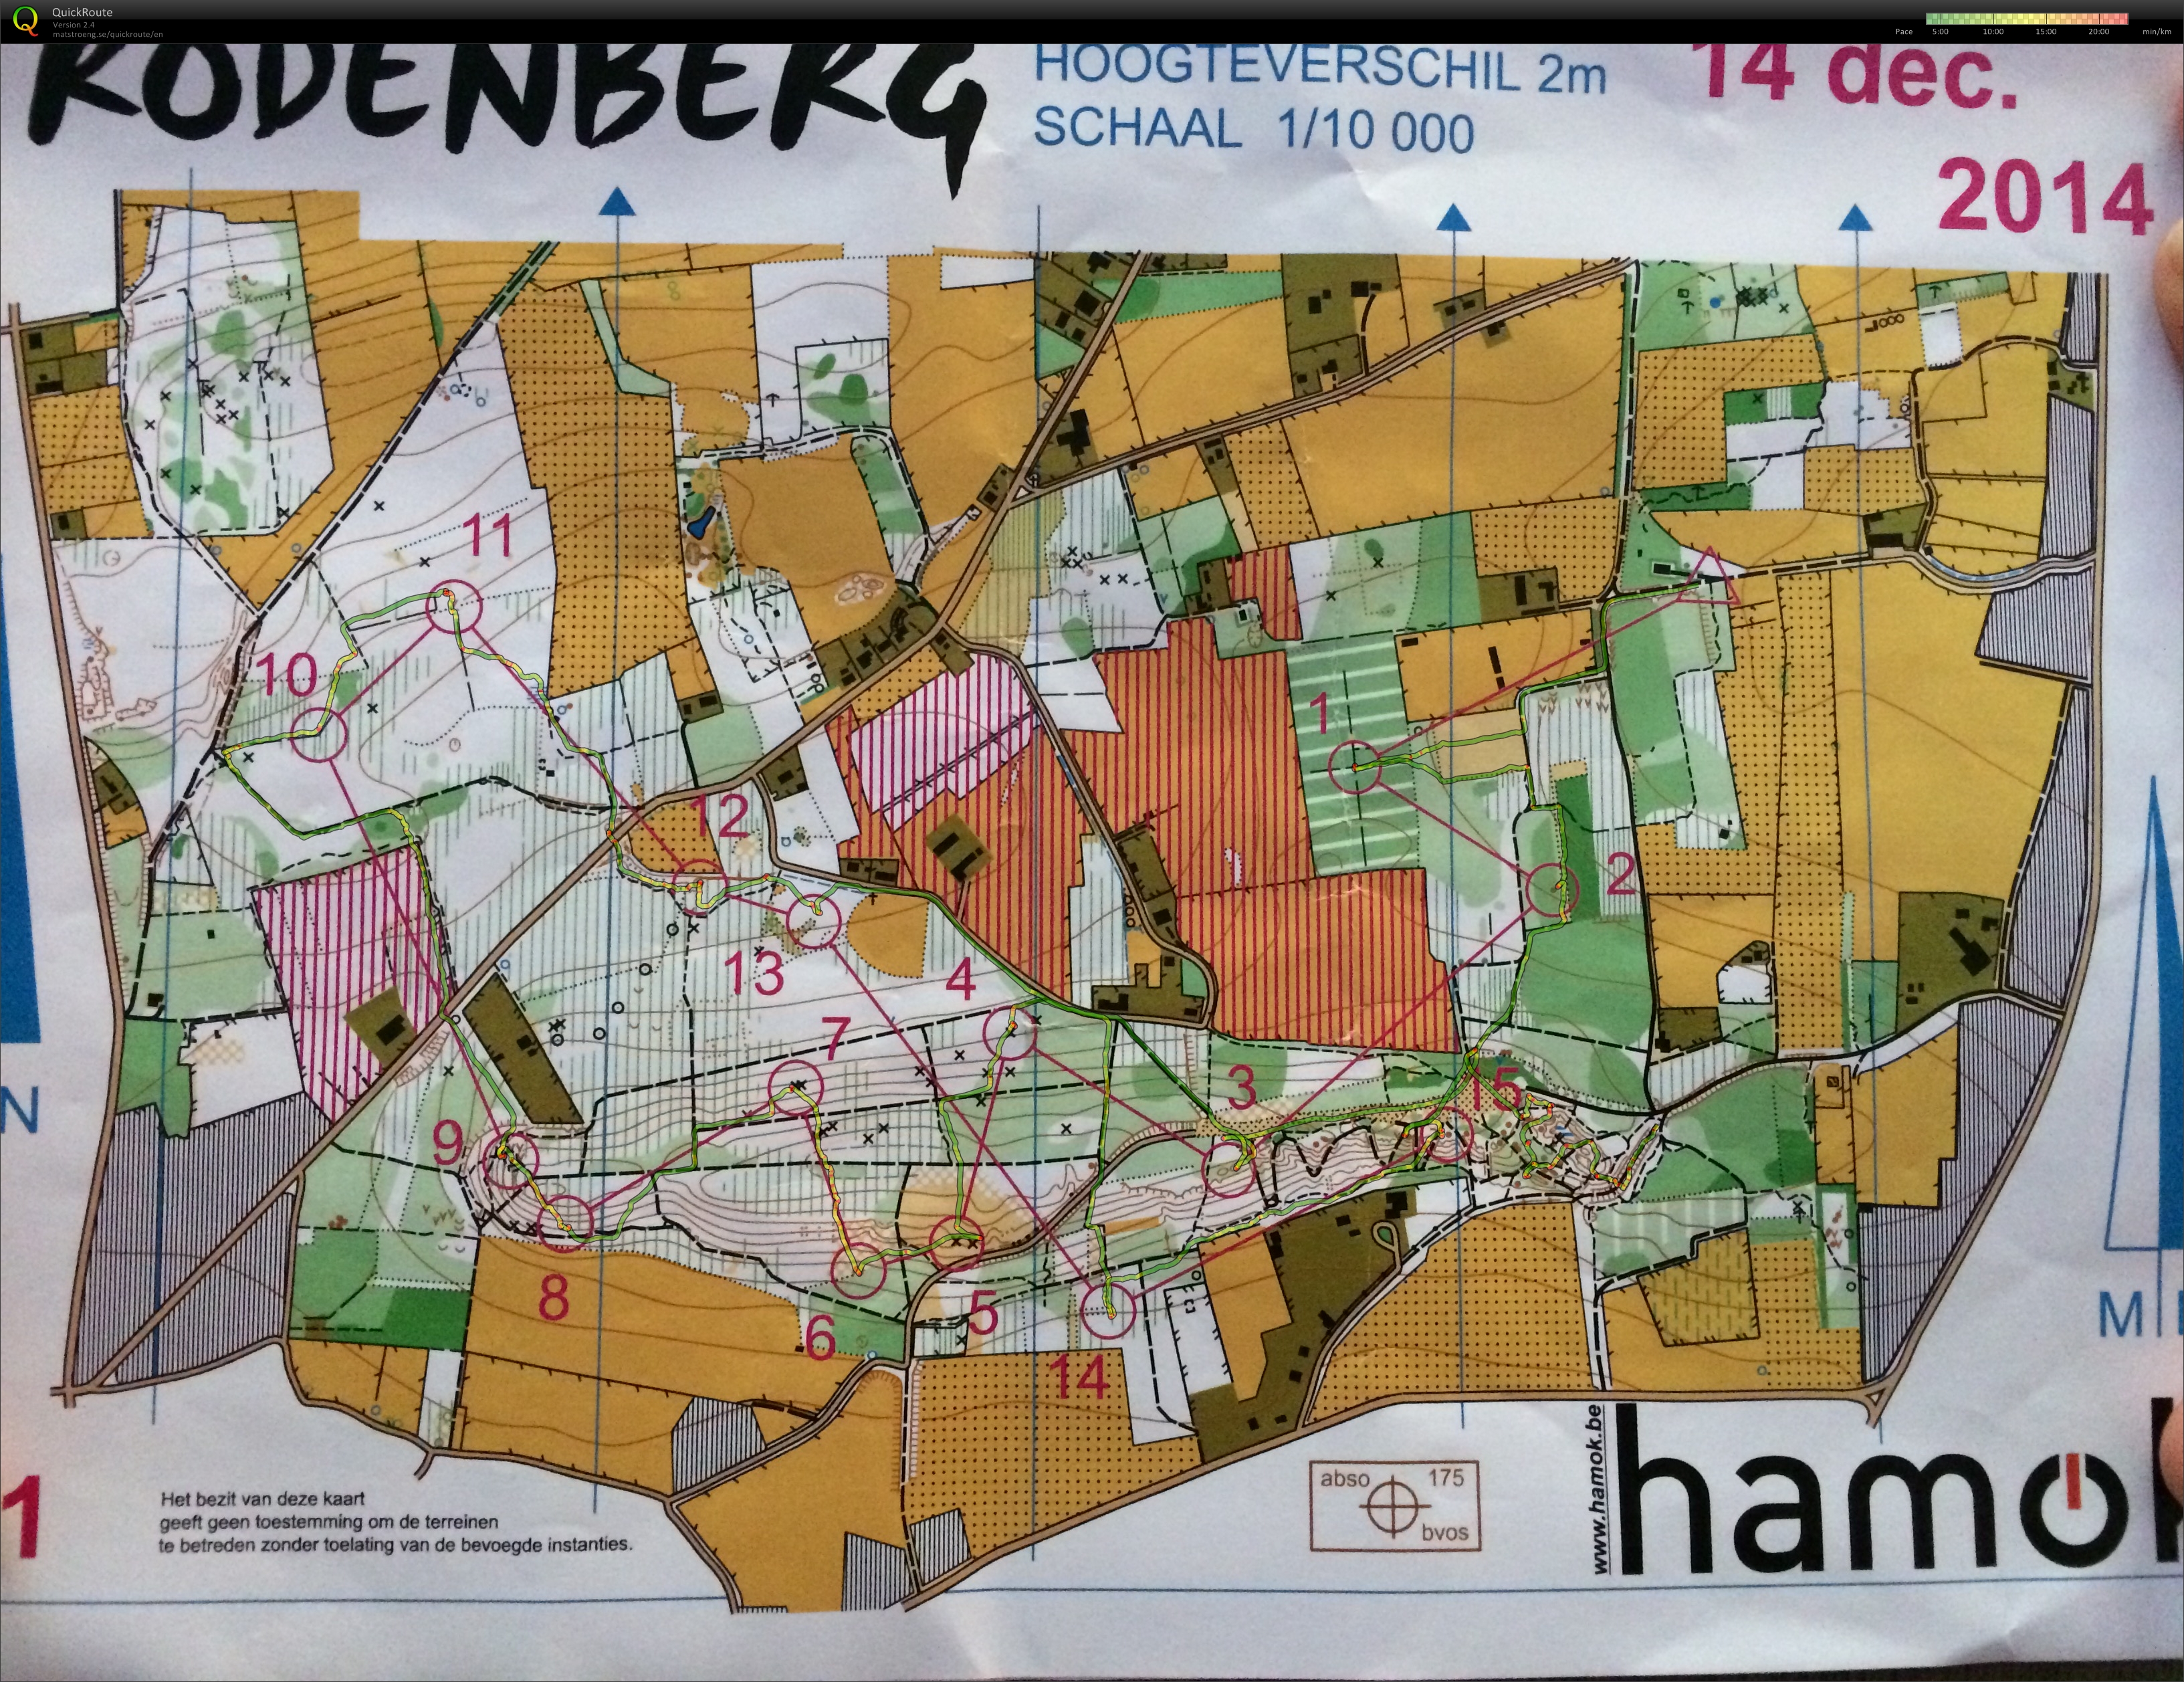 Rodenberg (14.12.2014)